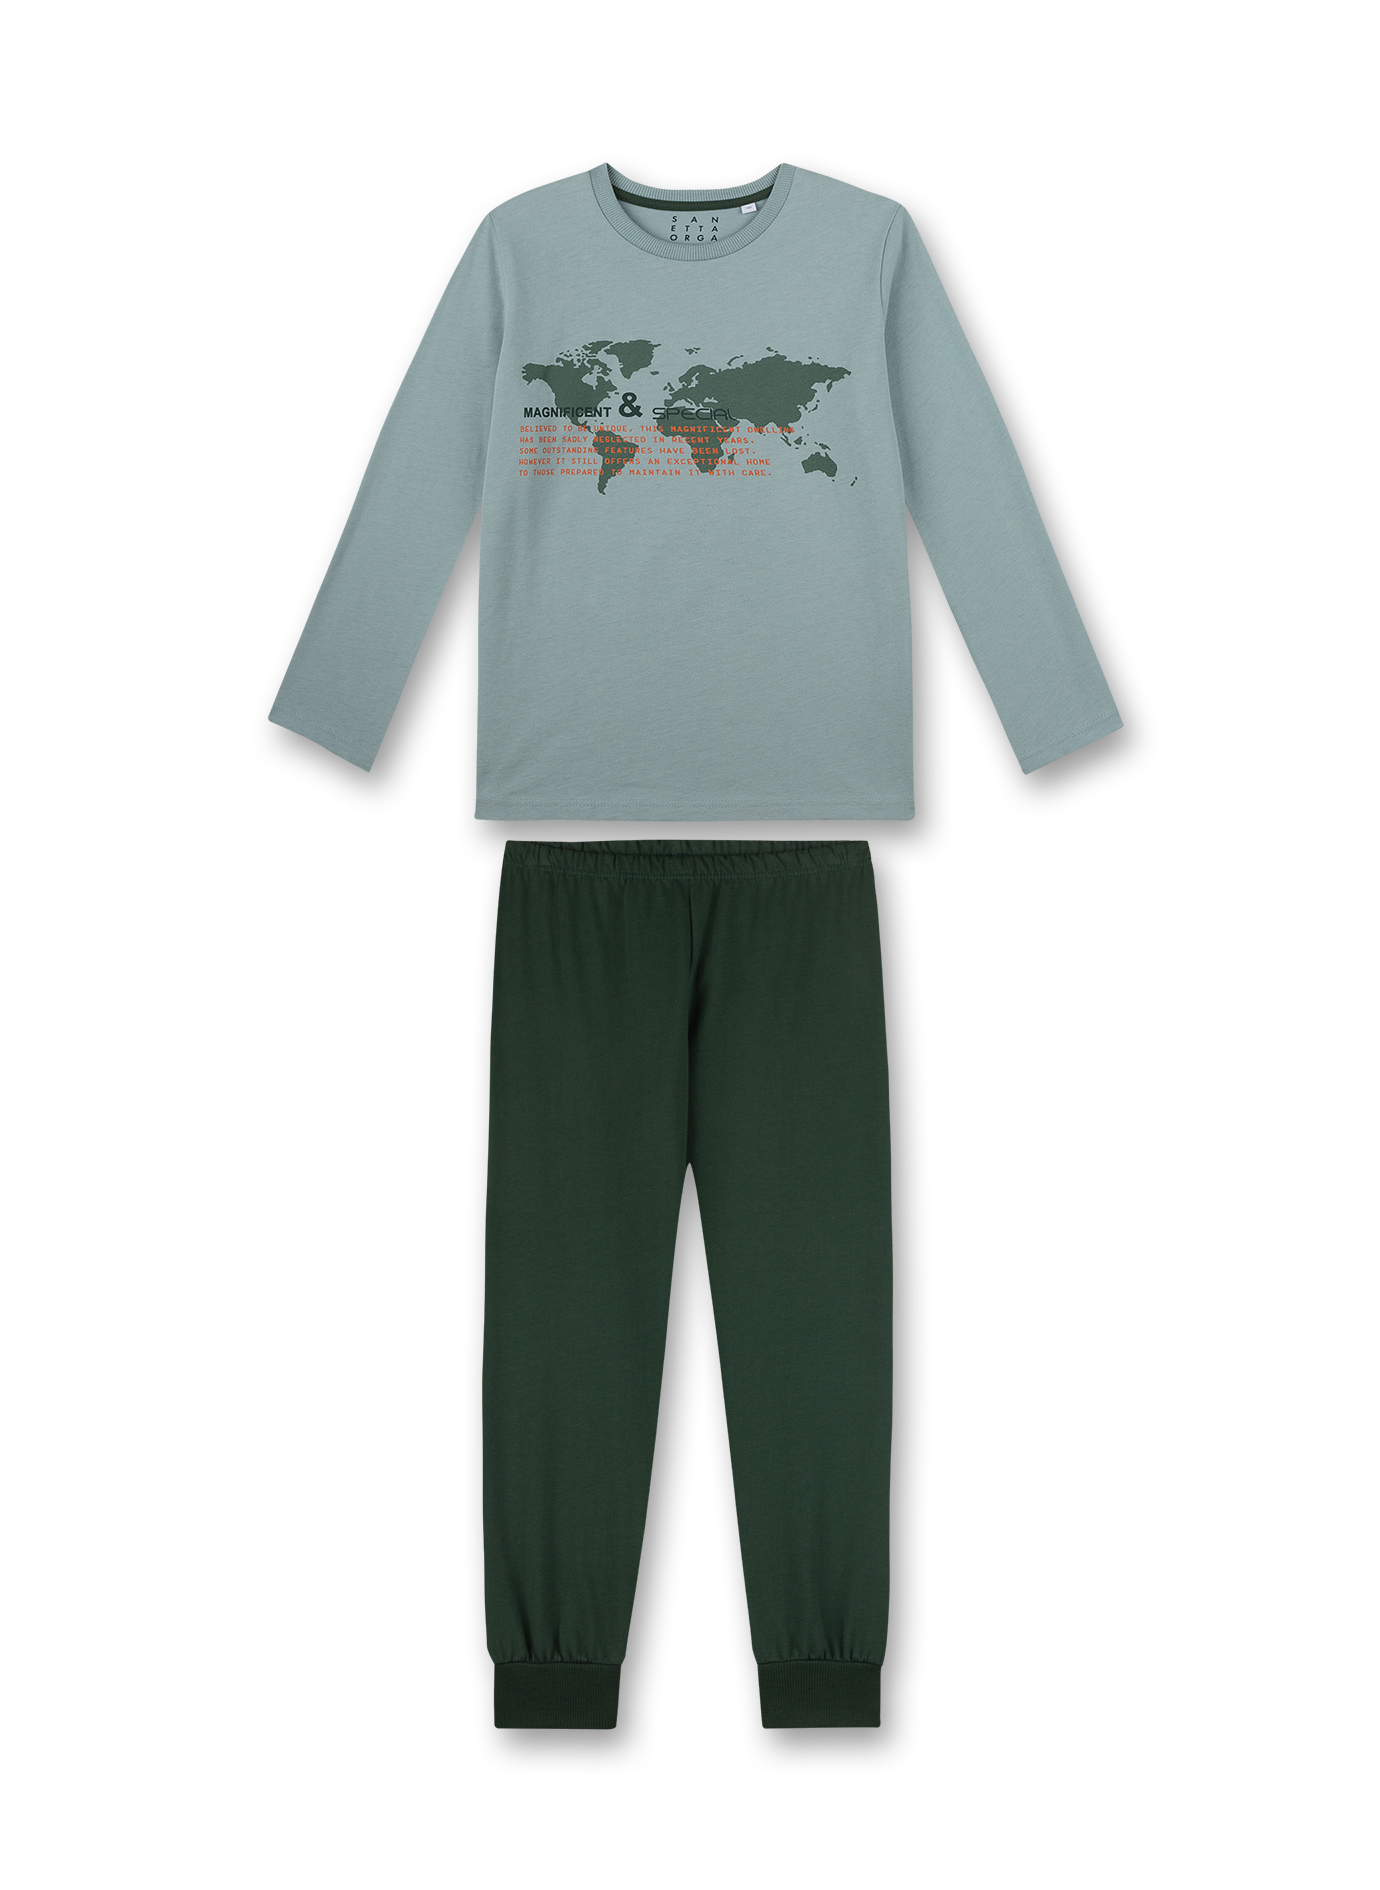 Jungen-Schlafanzug Blau Planet Earth